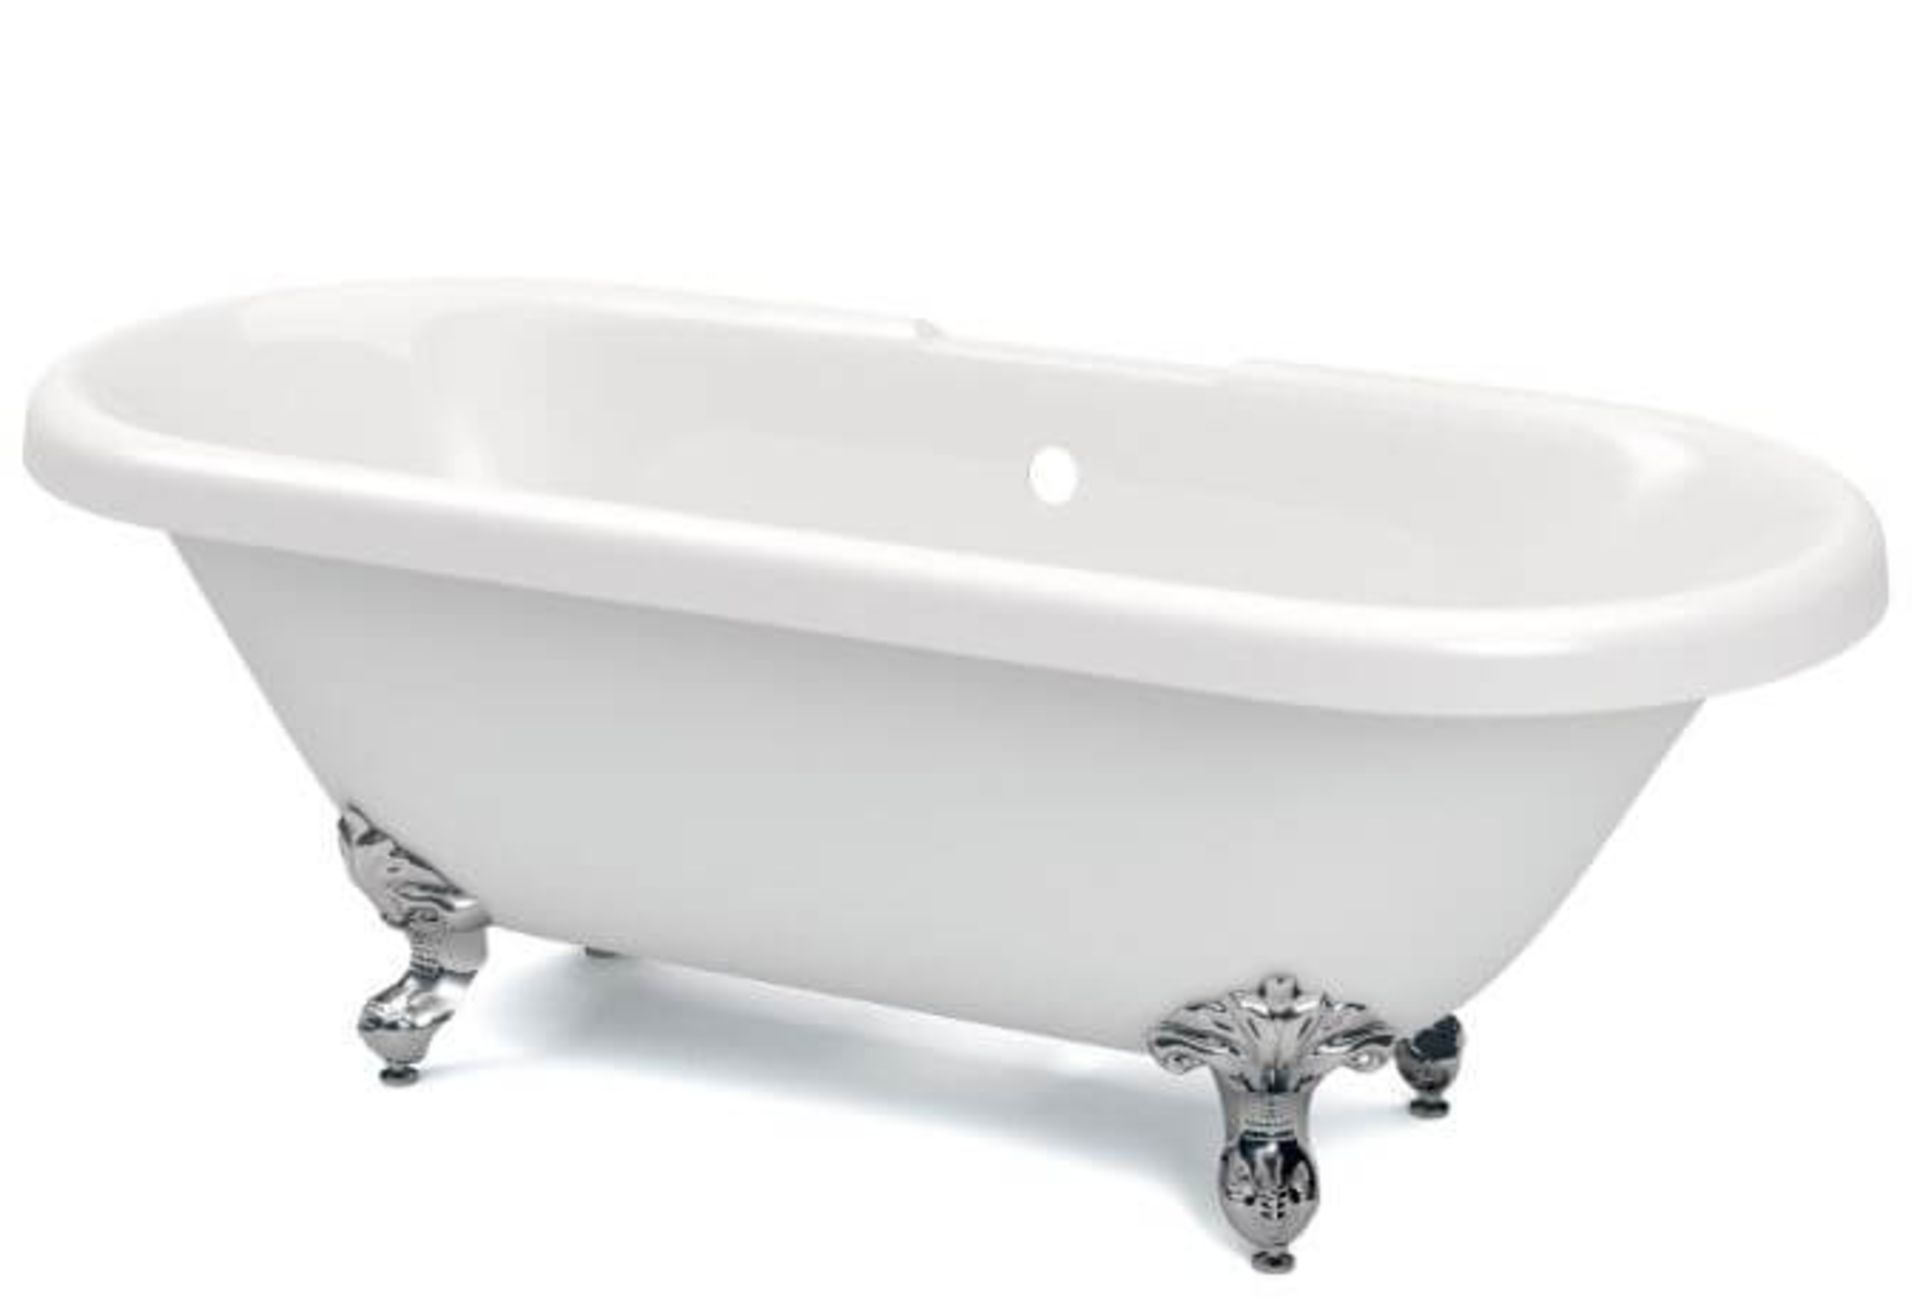 New (H2) 1690mm Richmond Freestanding White Bath With Chrome Feet. Richmond Freestanding White ... - Image 2 of 2